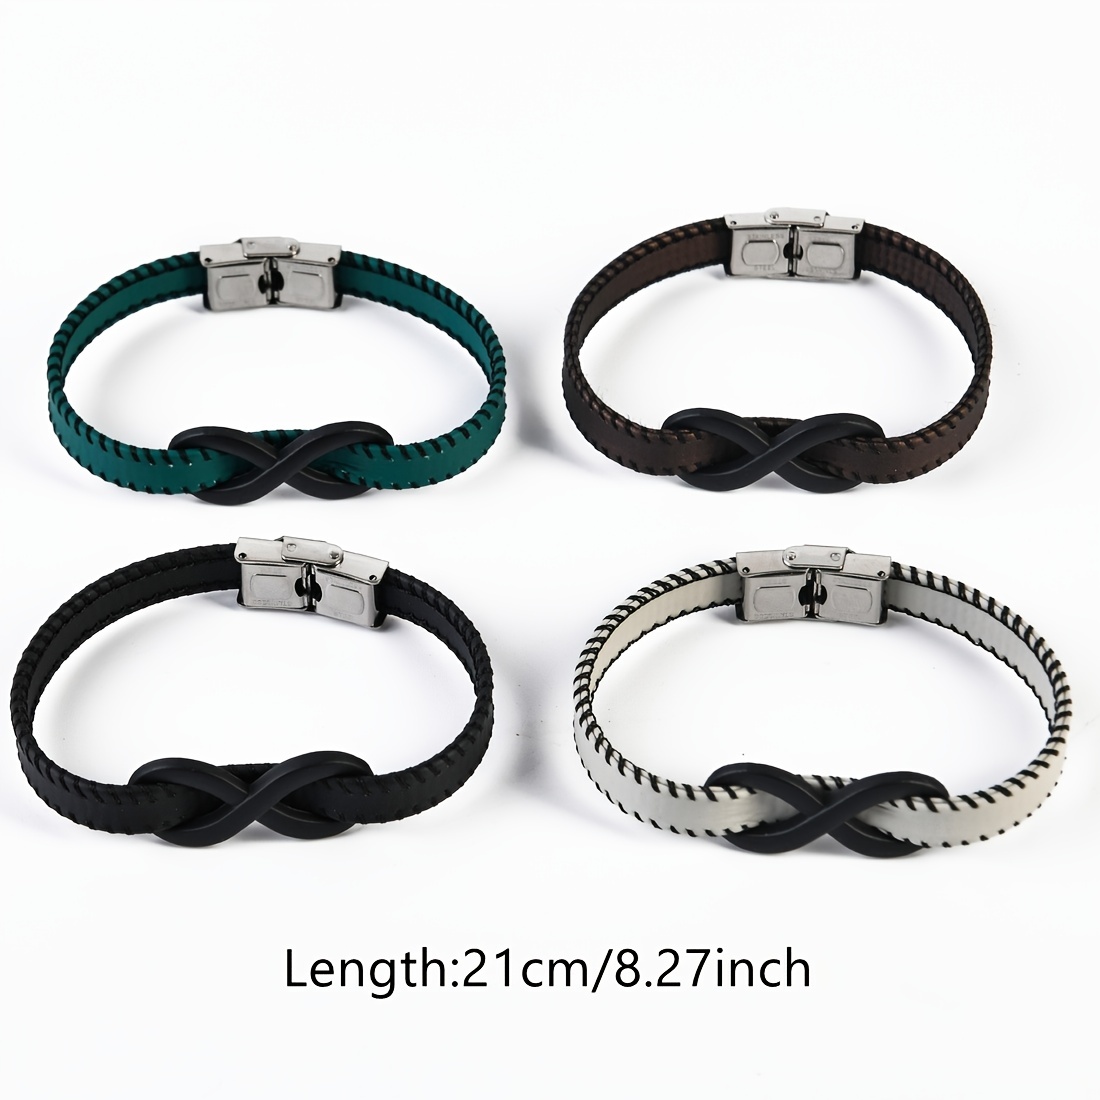 Jewel Trendstyle - Classic Leather Bracelet for Men